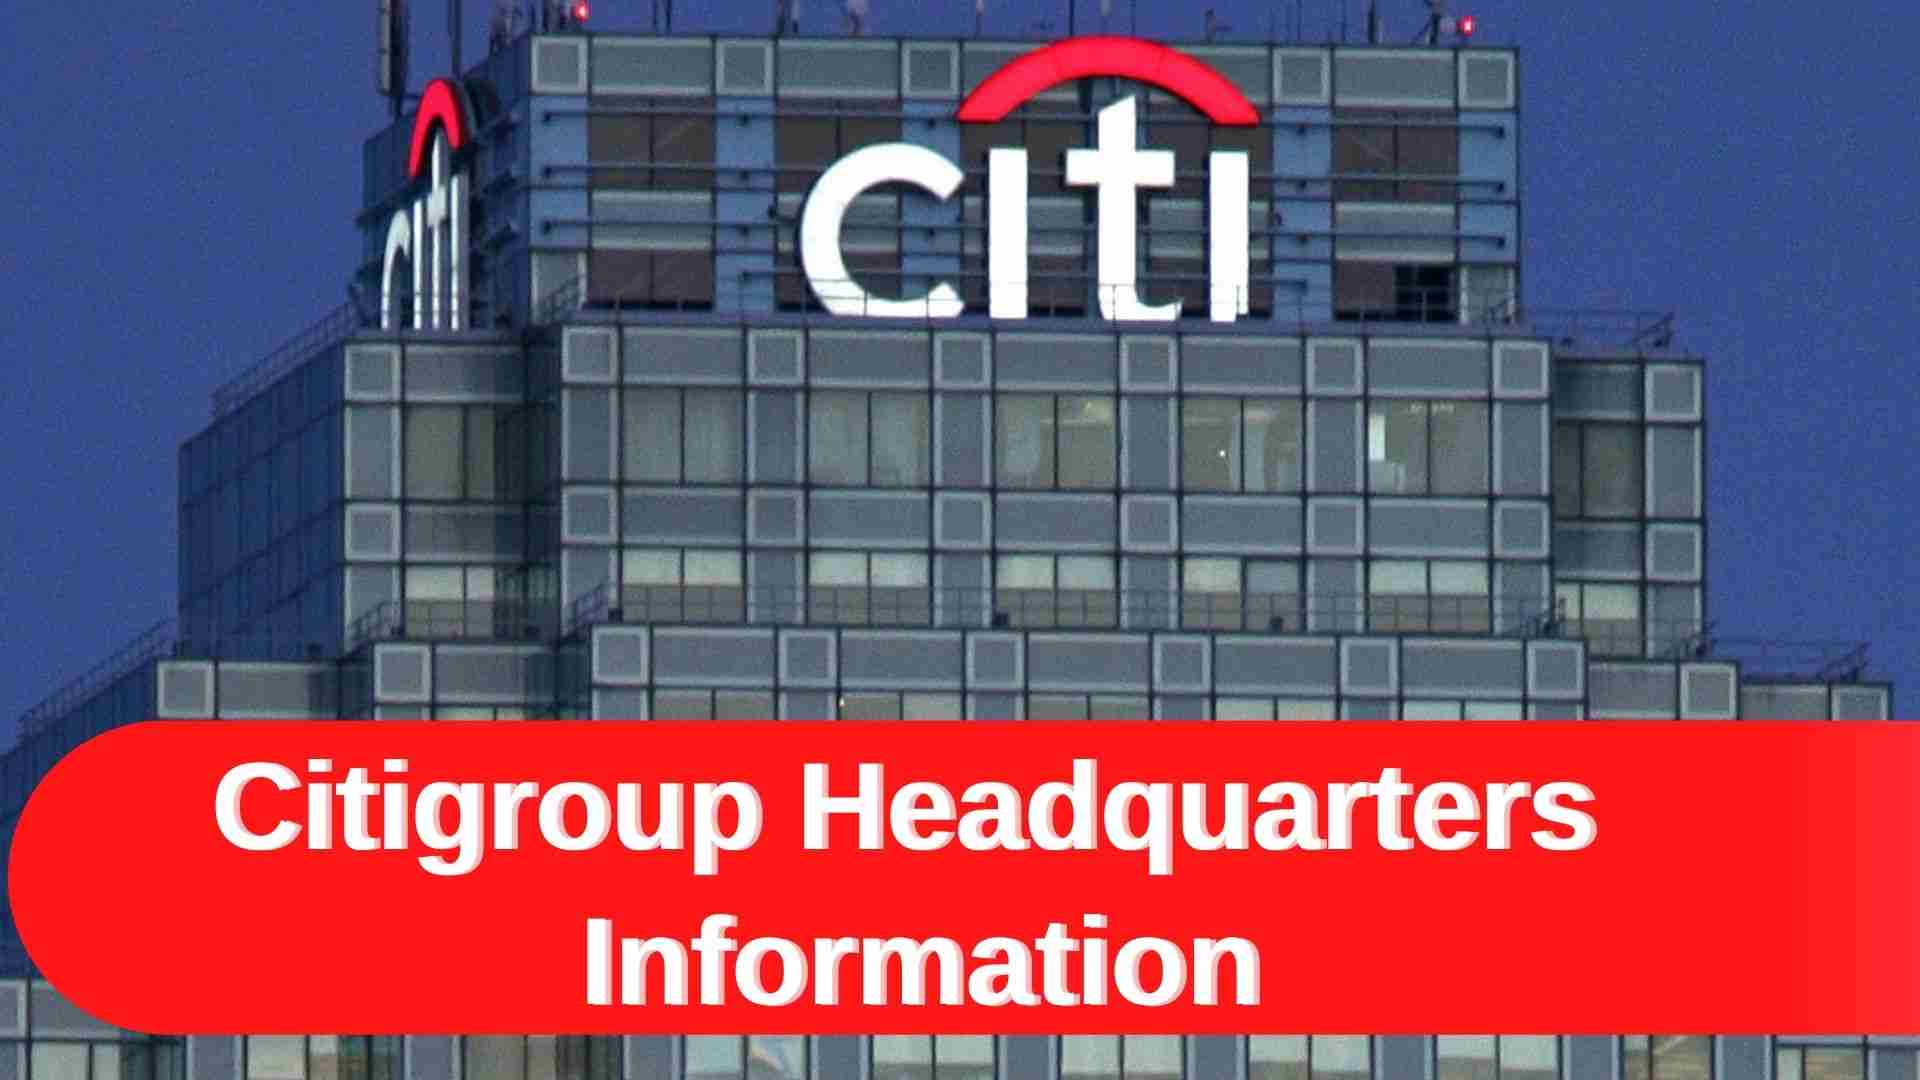 Citigroup Headquarters Information